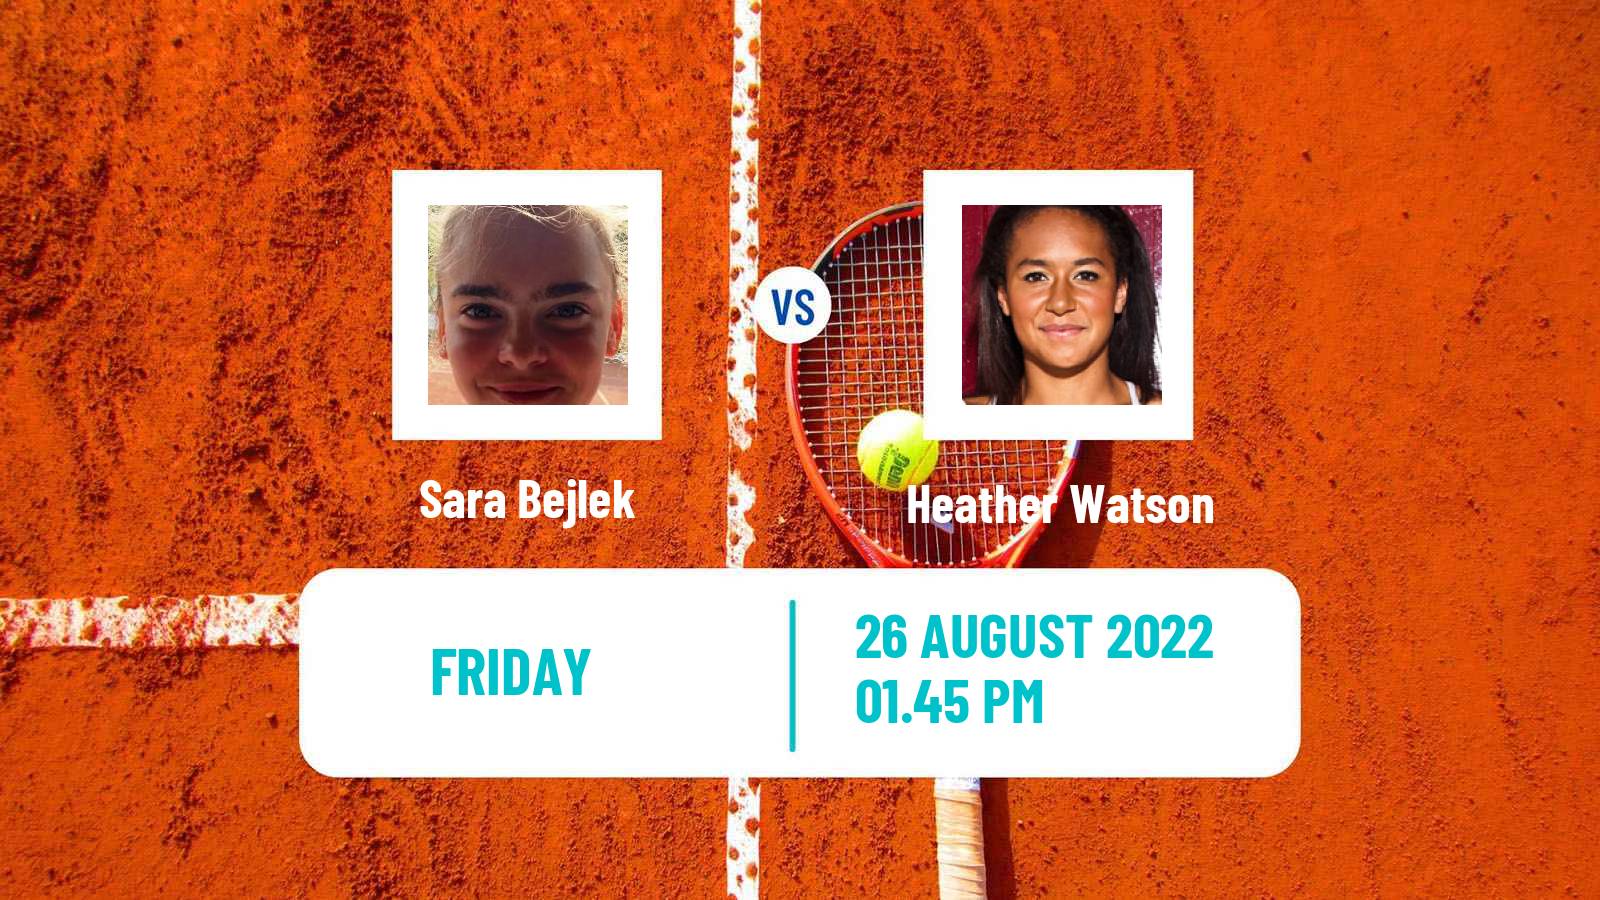 Tennis WTA US Open Sara Bejlek - Heather Watson